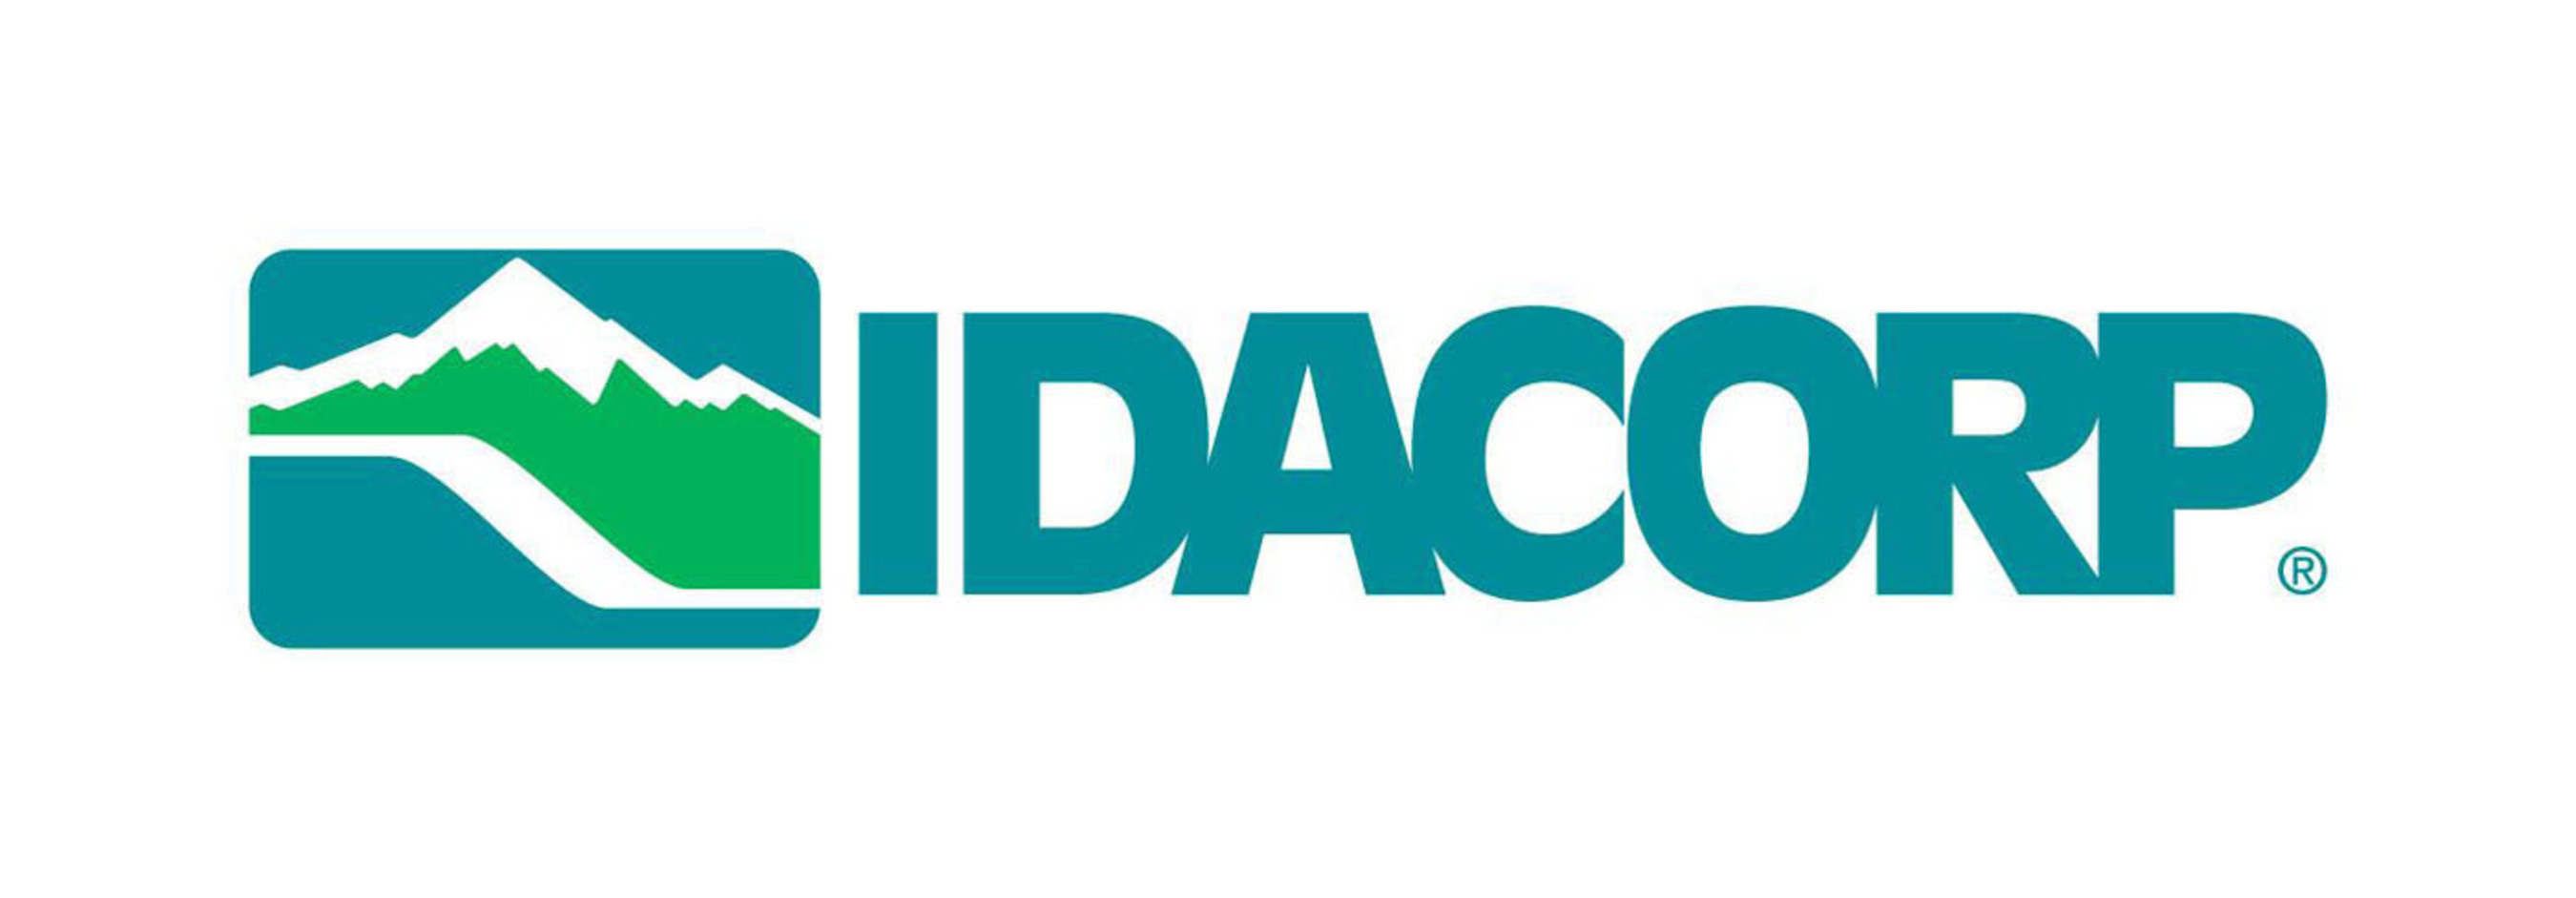 IDACORP, Inc. logo. (PRNewsFoto/IDACORP, Inc.) (PRNewsFoto/IDACORP, INC.)